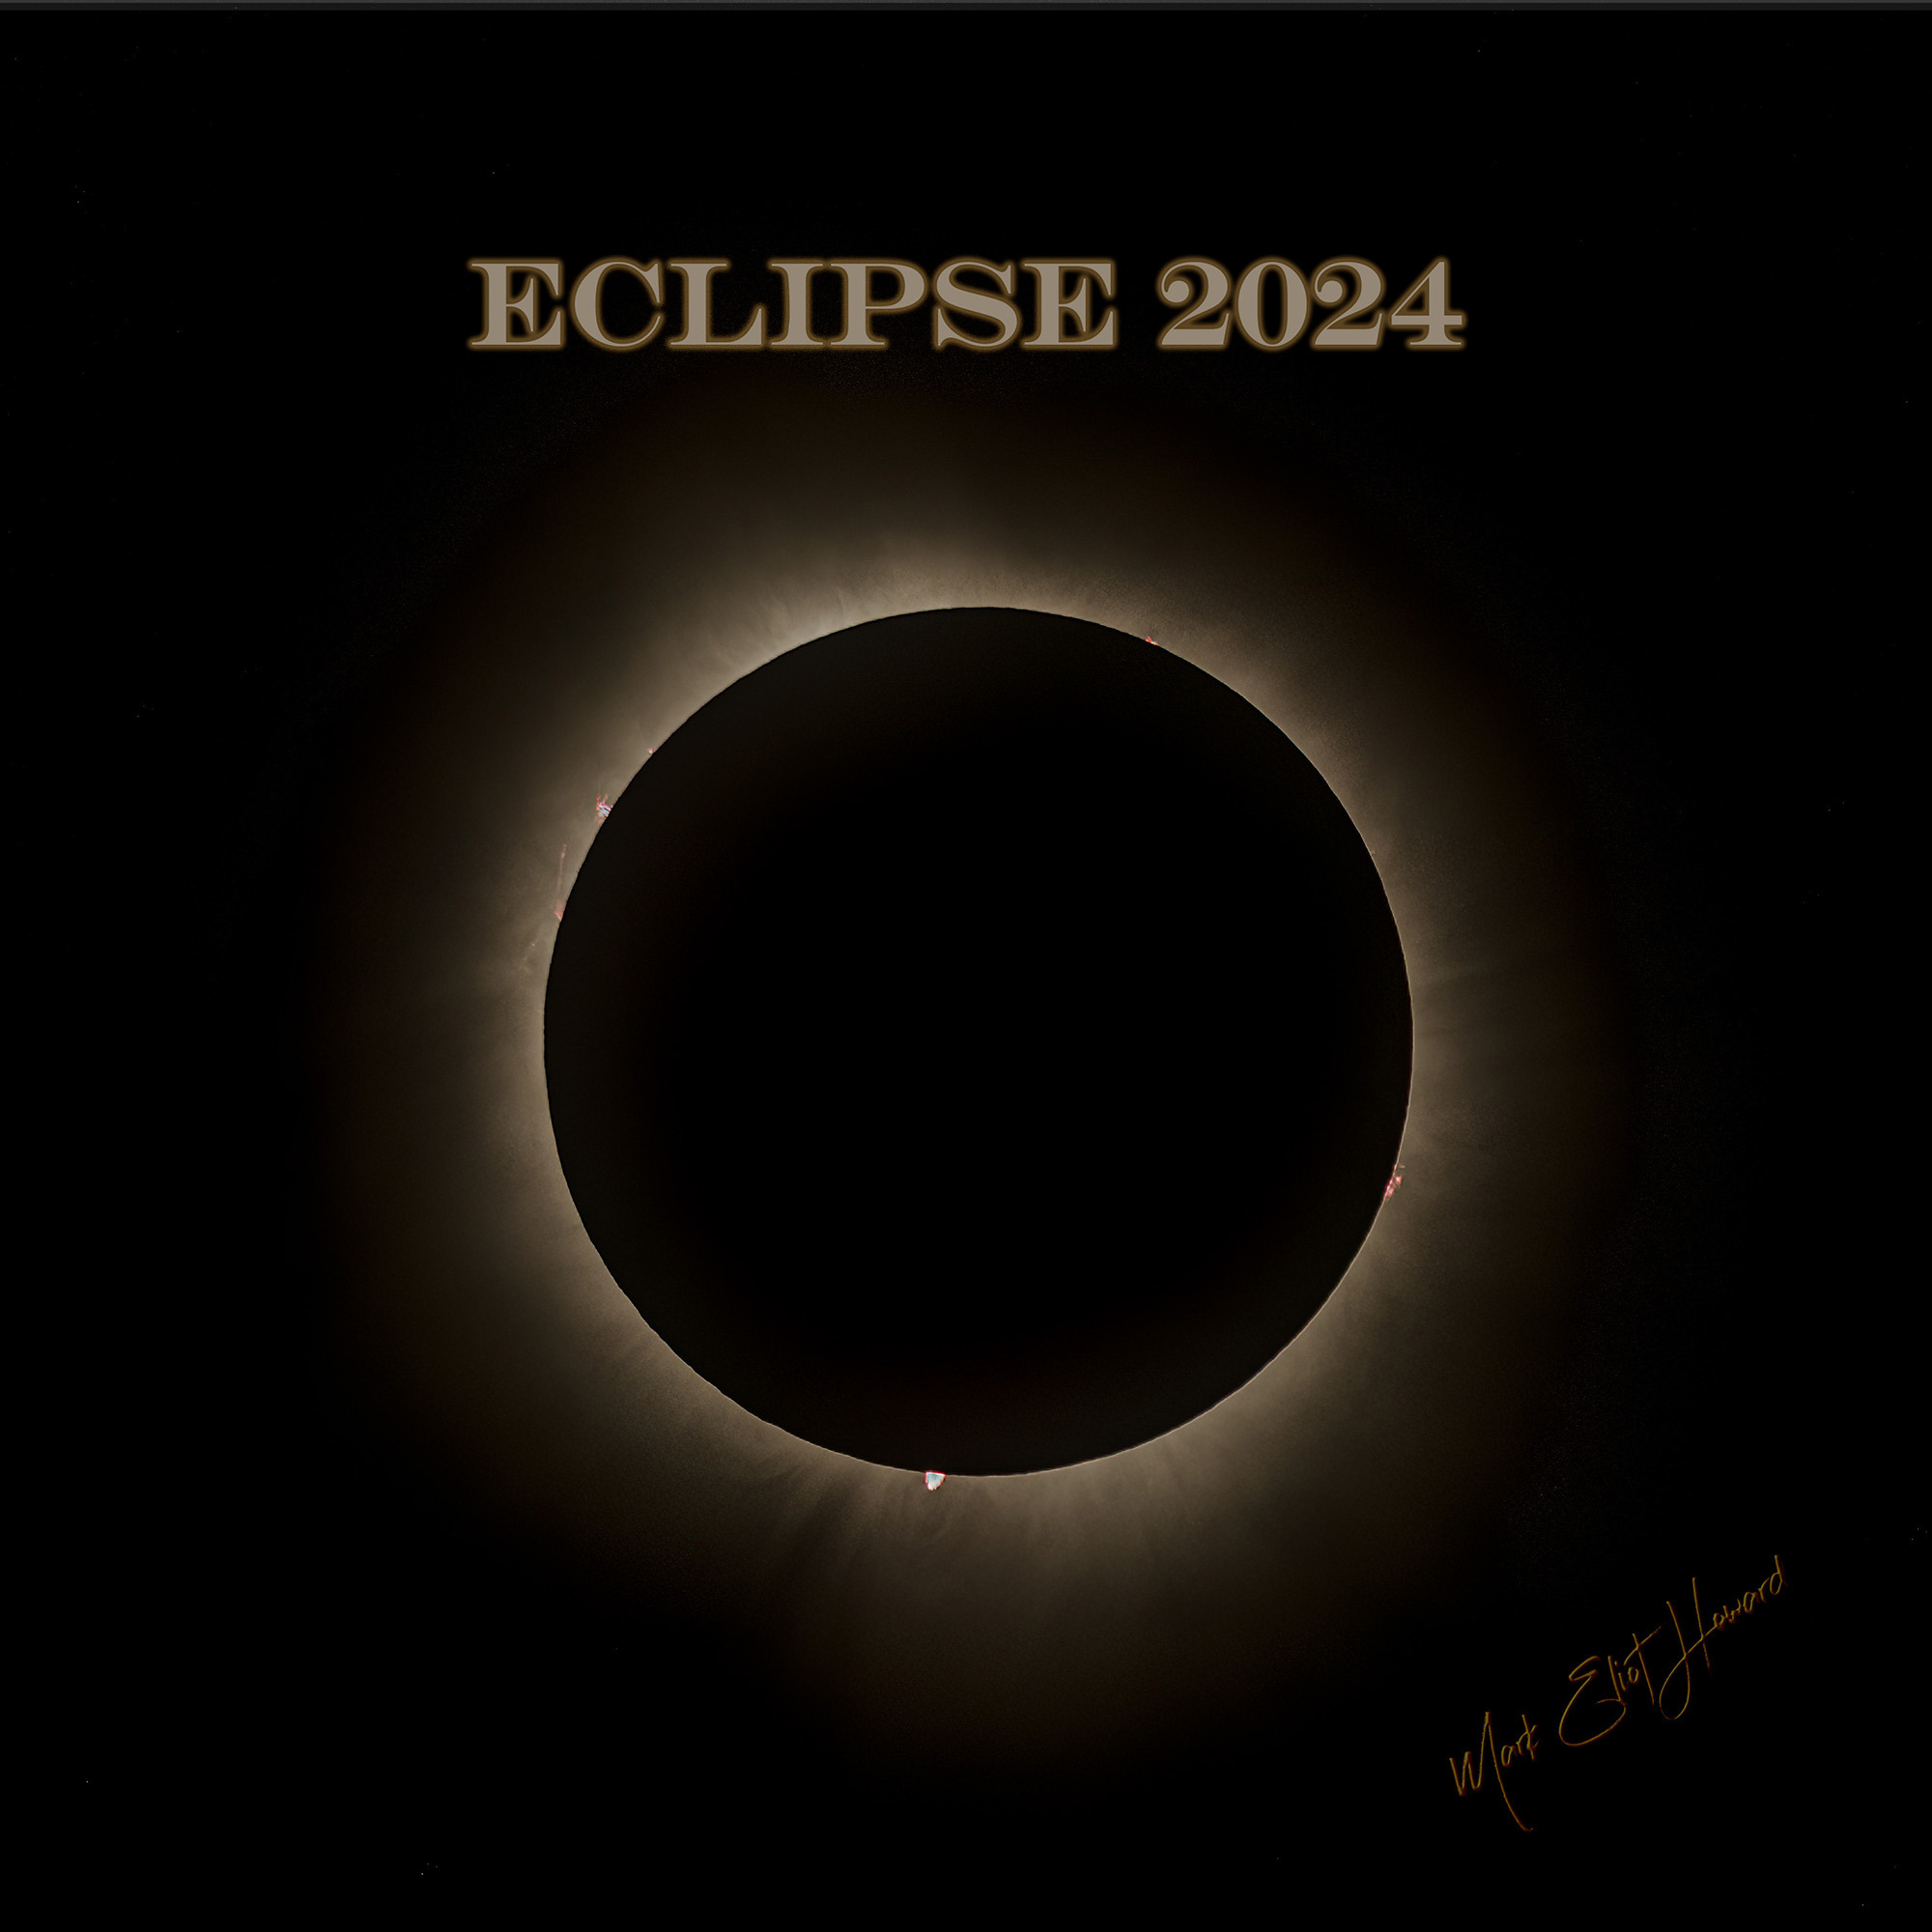 Eclipse 2024 limited edition web yxwmv6